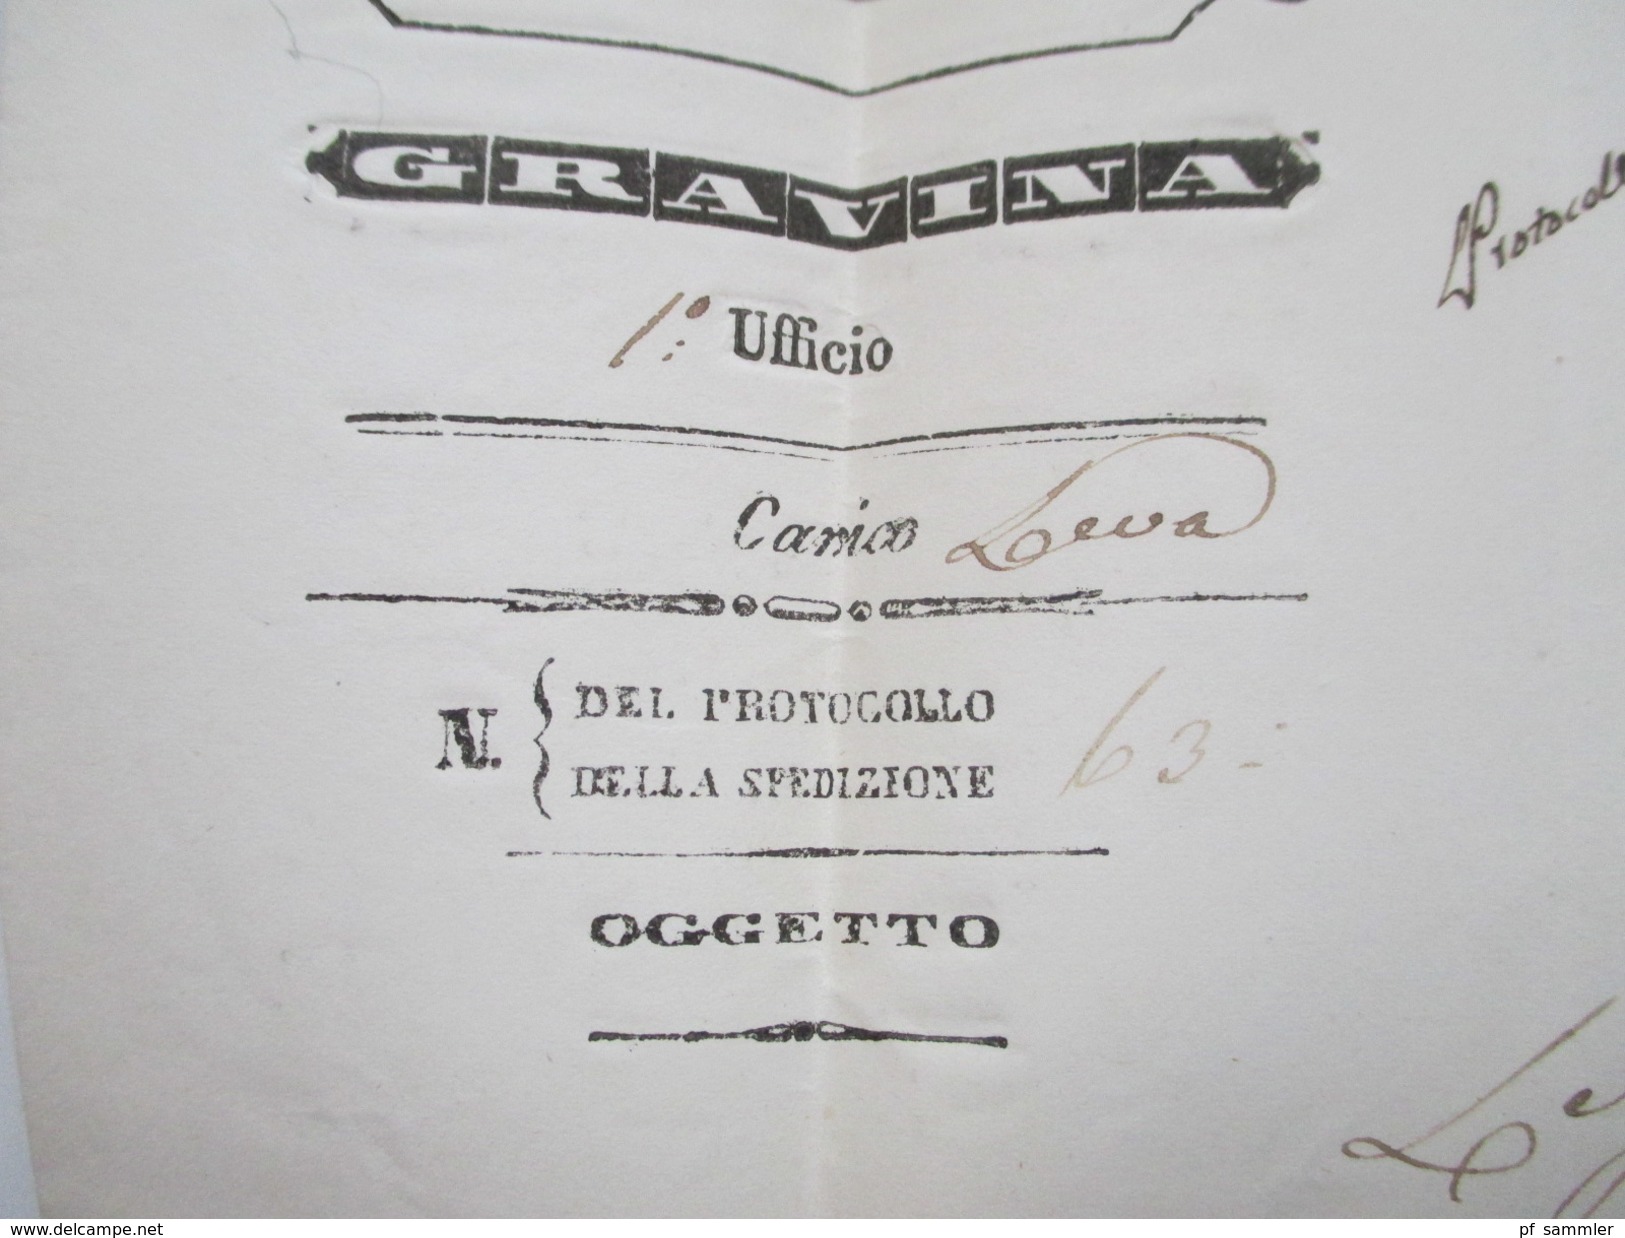 Italien Vorphila 1850 Gravina Amministrazione Del Comune die Gravina. 2 schöne Stempel! Behördenpost!